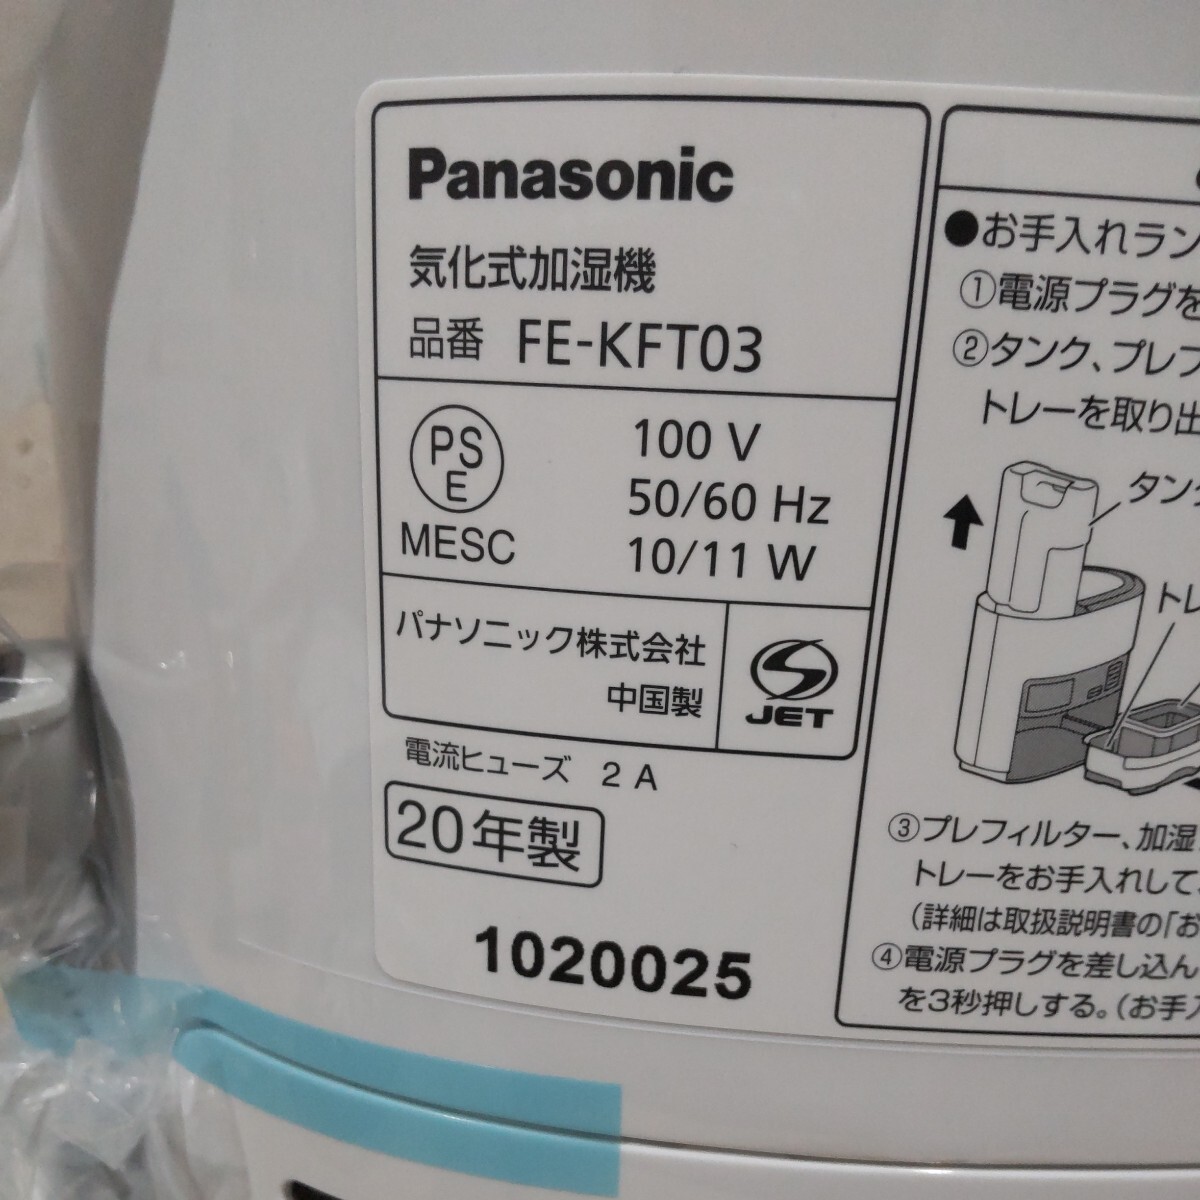 SFK240507 未使用 Panasonic 気化式加湿器 ホワイト FE-KFT03-W パナソニック 加湿器 スーパーアレルバスター 家電 電化製品_画像4